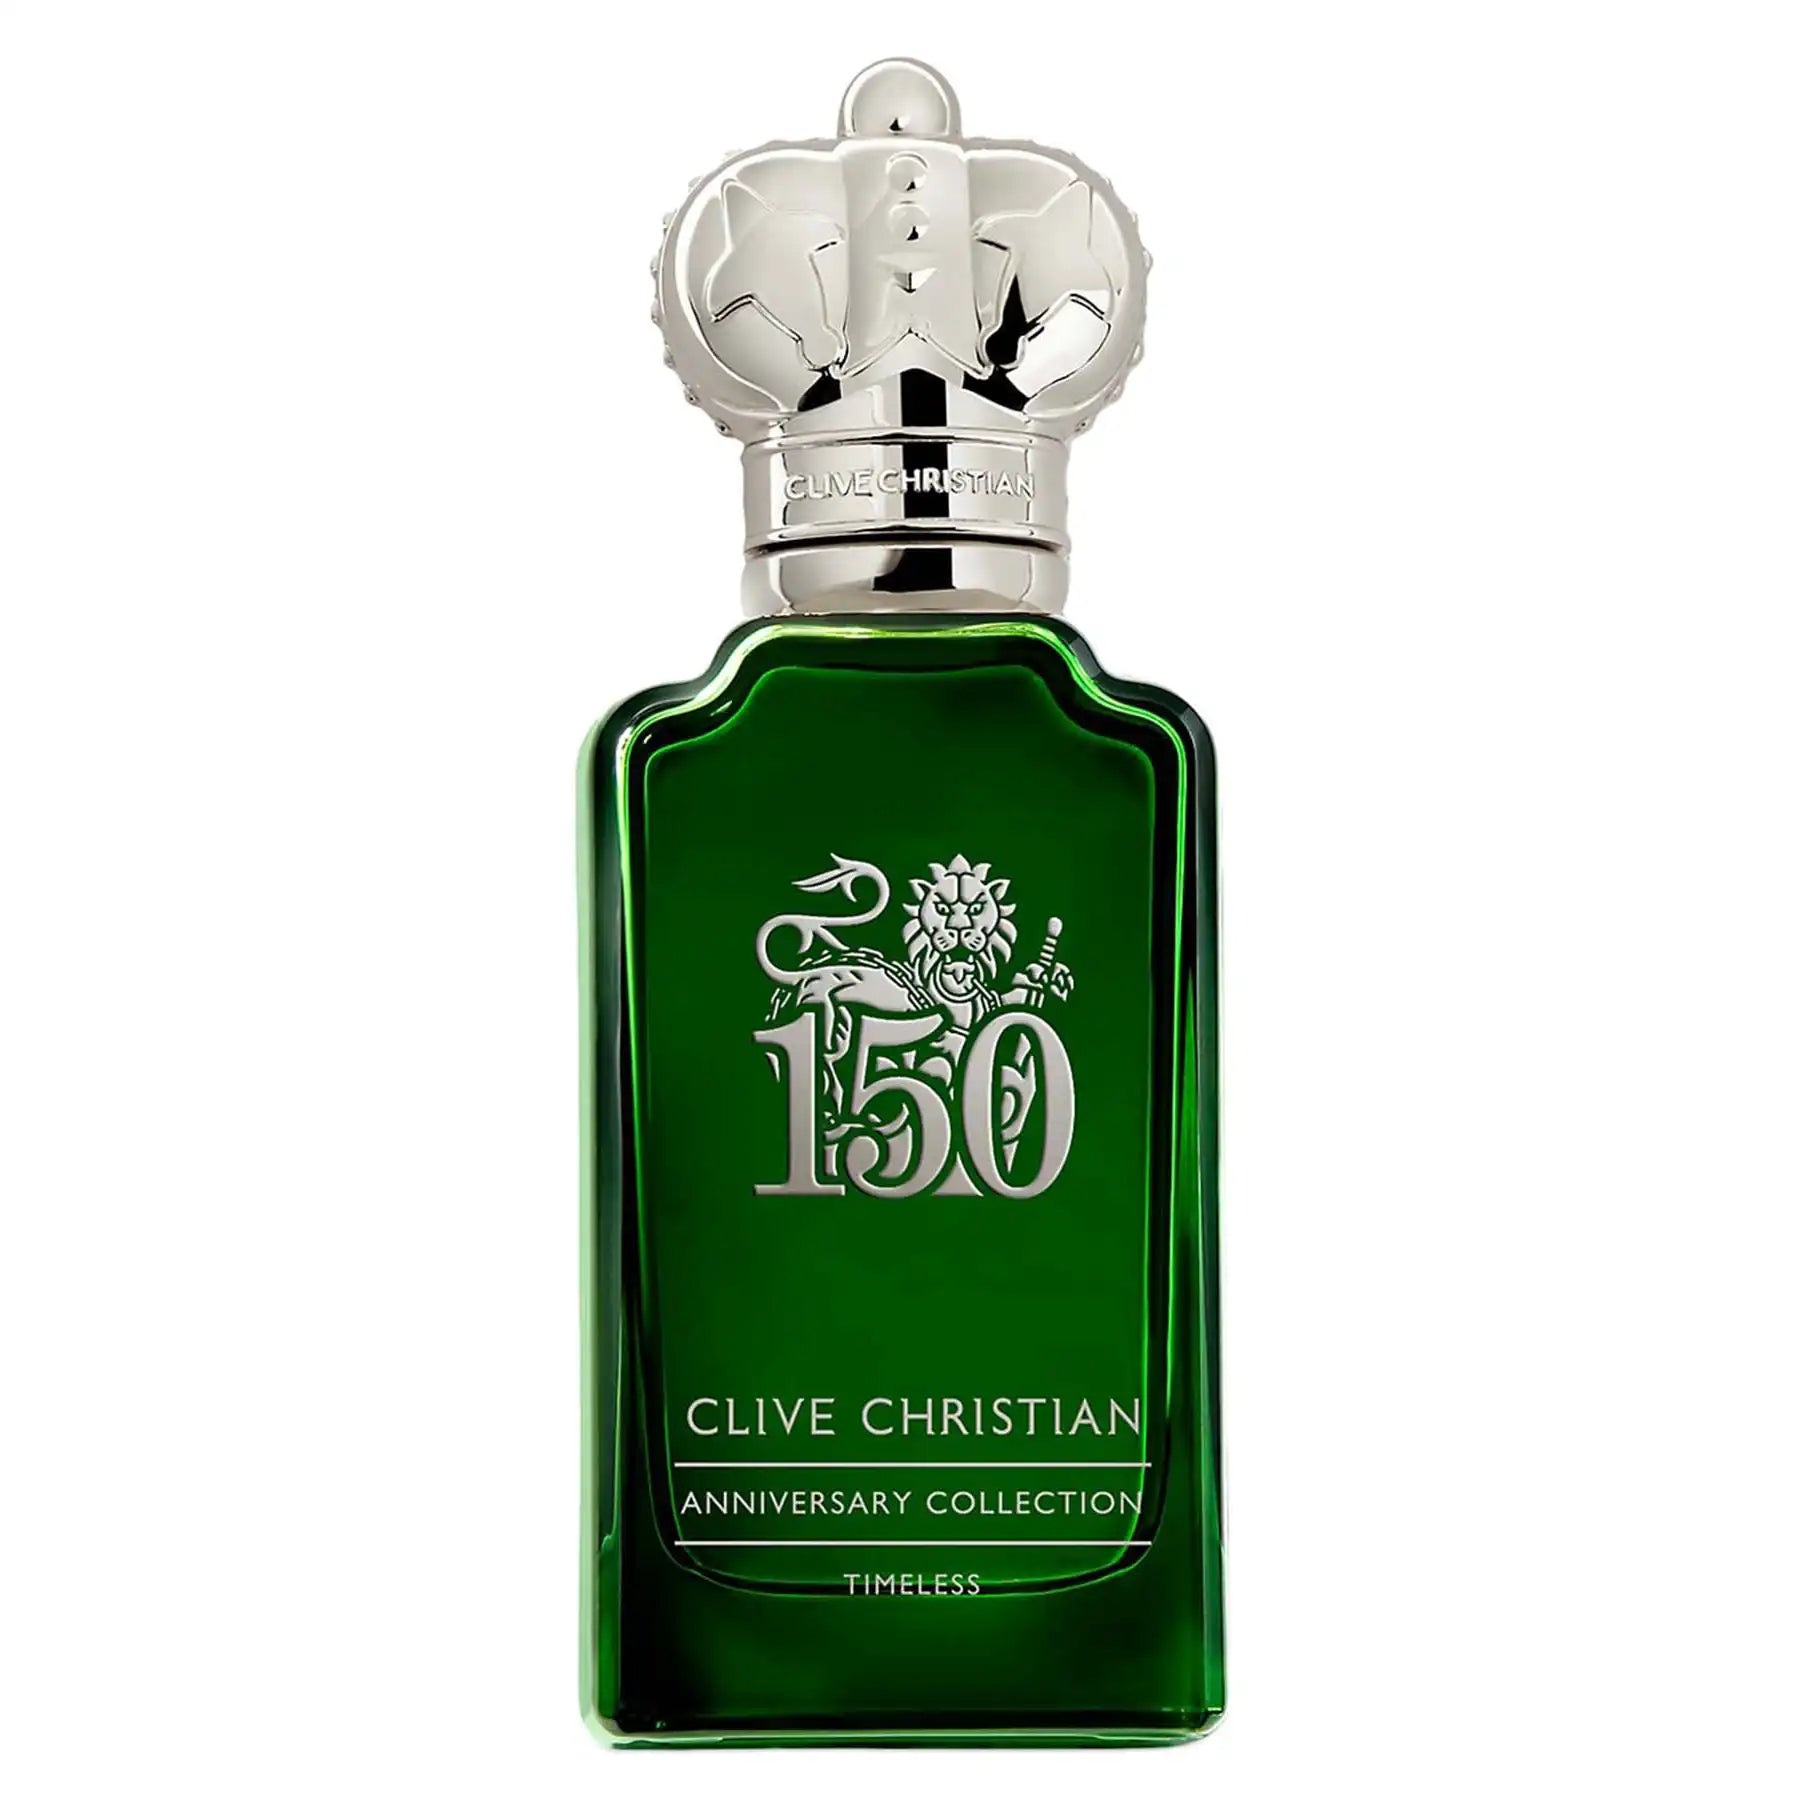 Clive Christian 150th Anniversary Timeless Eau de Parfum 50ml